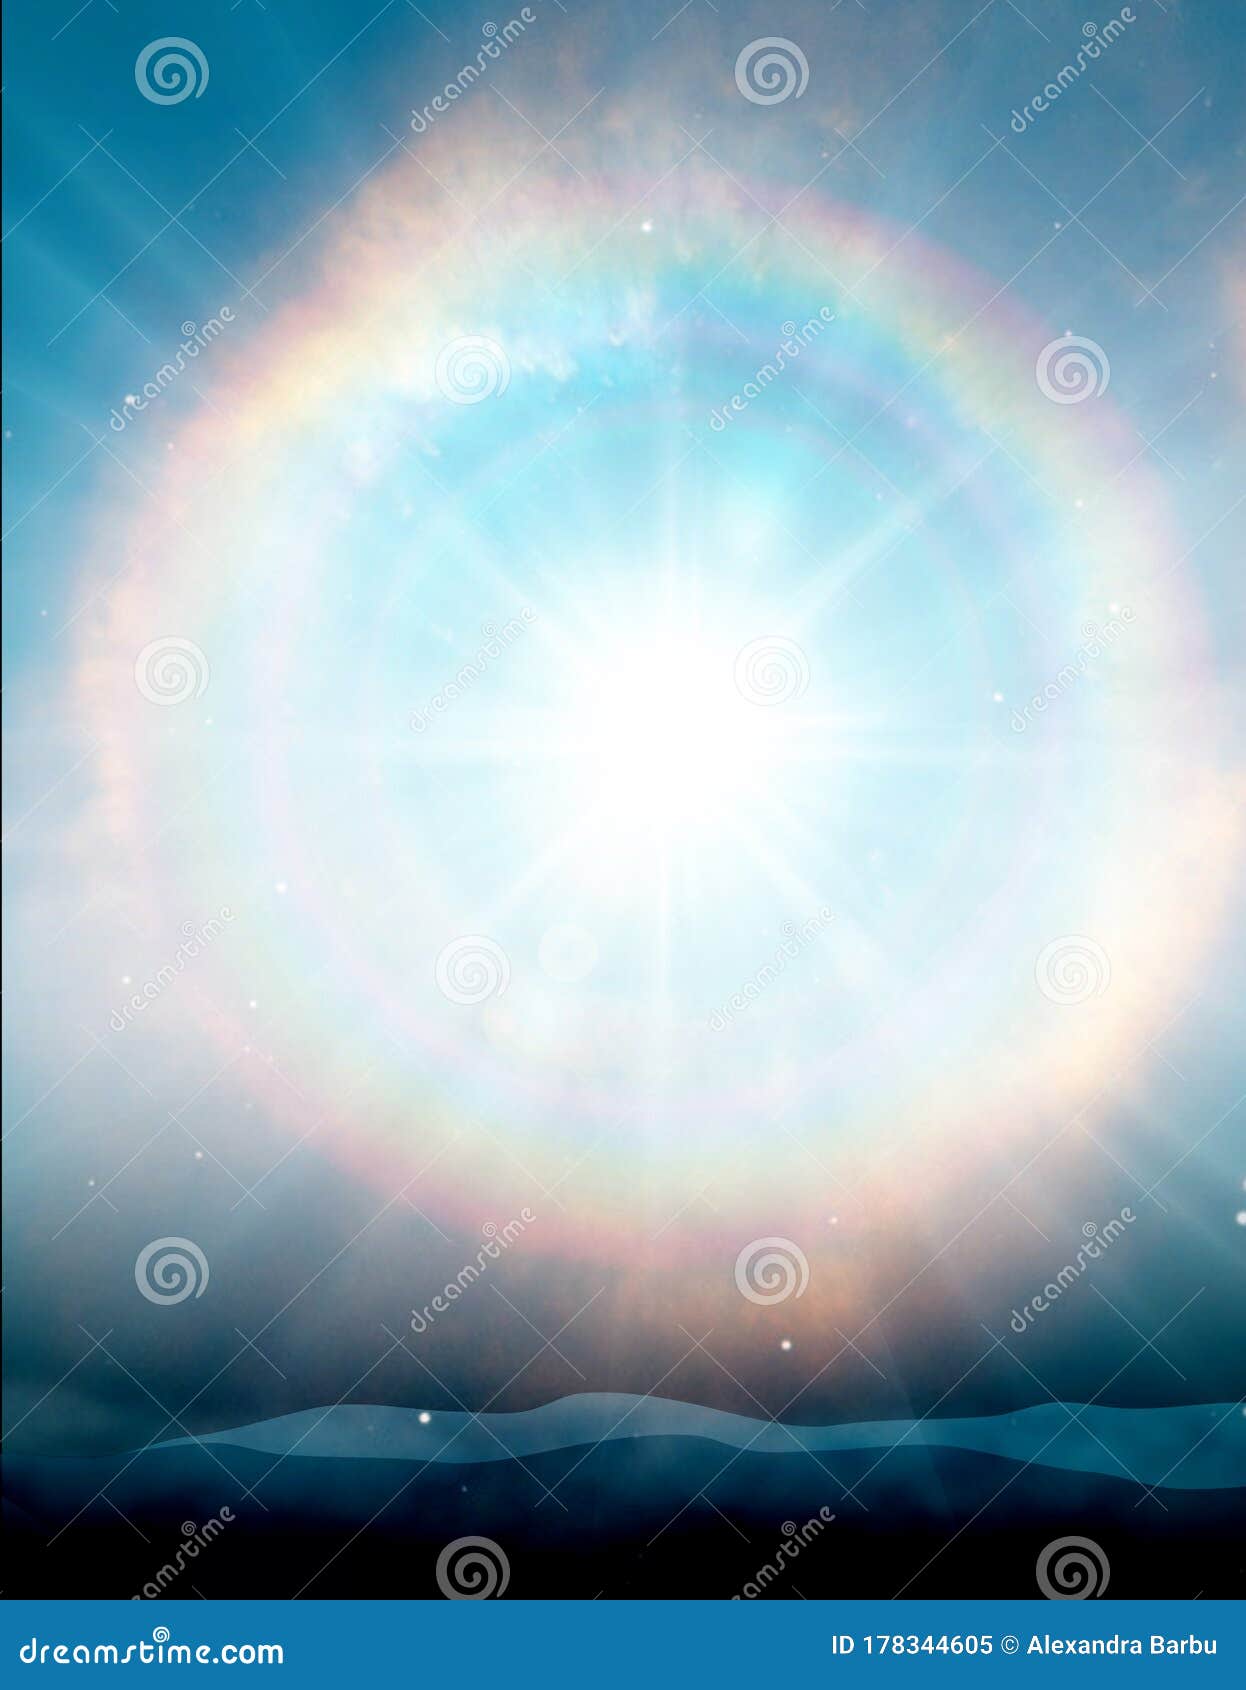 sun portal, rainbow entrance, heaven, gate to other world